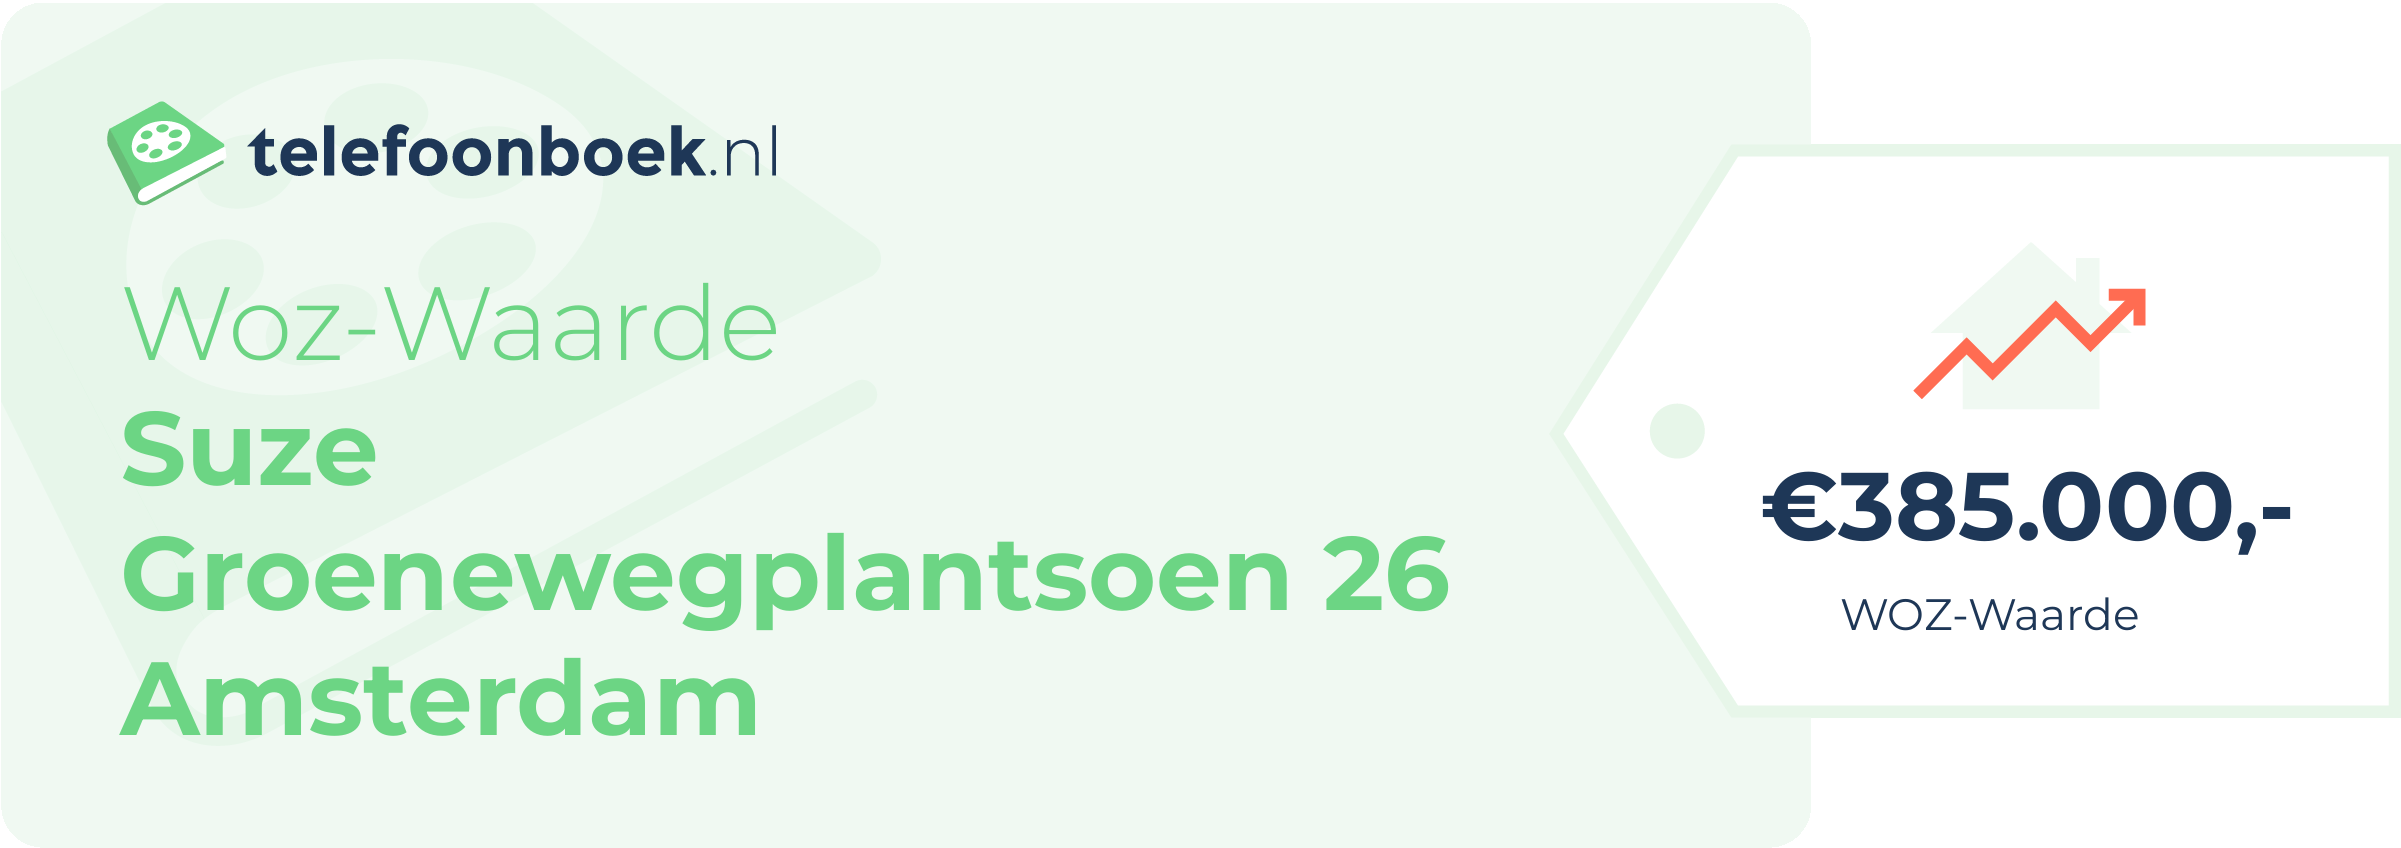 WOZ-waarde Suze Groenewegplantsoen 26 Amsterdam